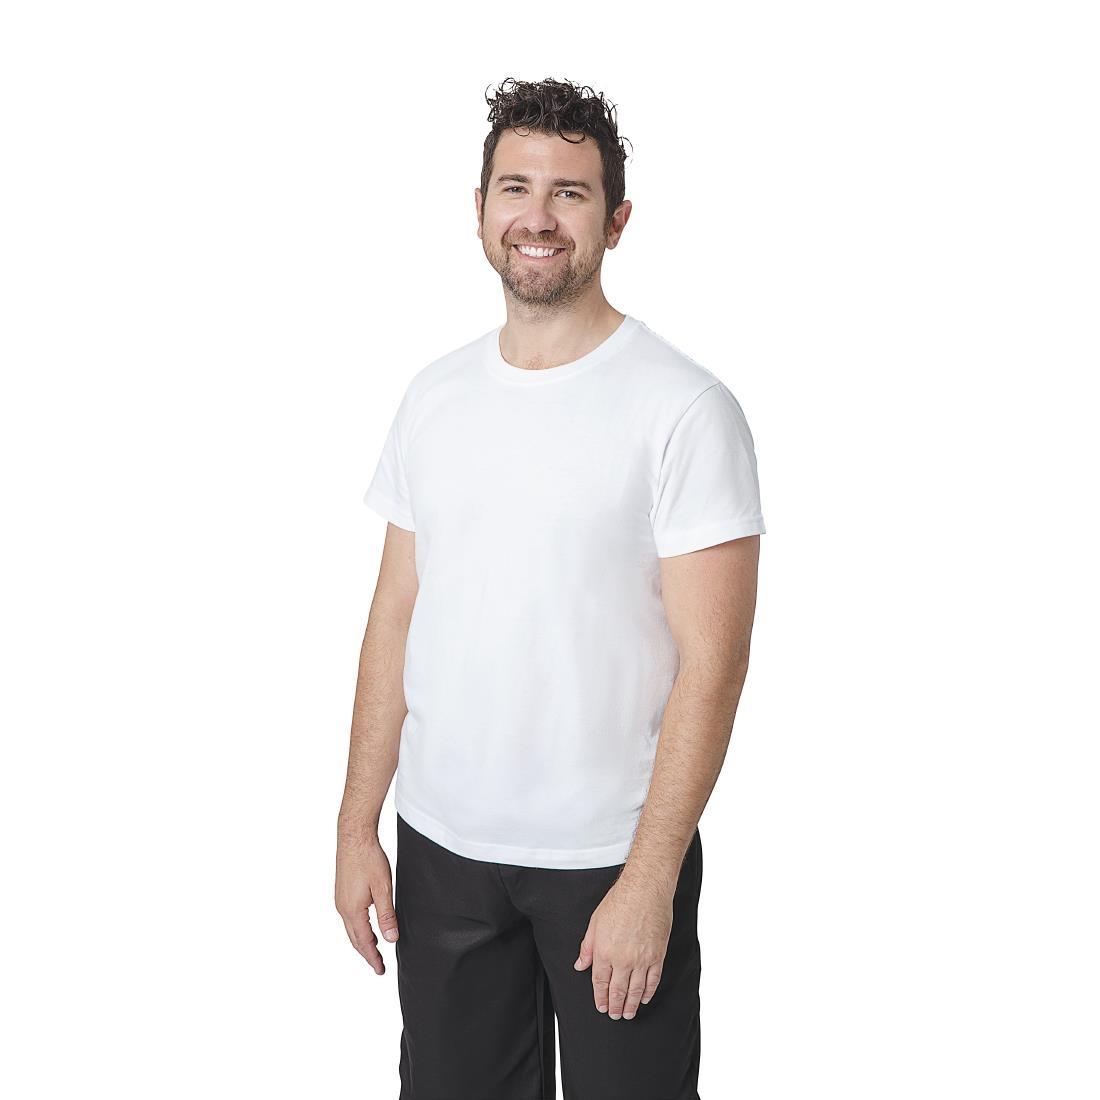 Unisex Chef T-Shirt White L - A103-L  - 3